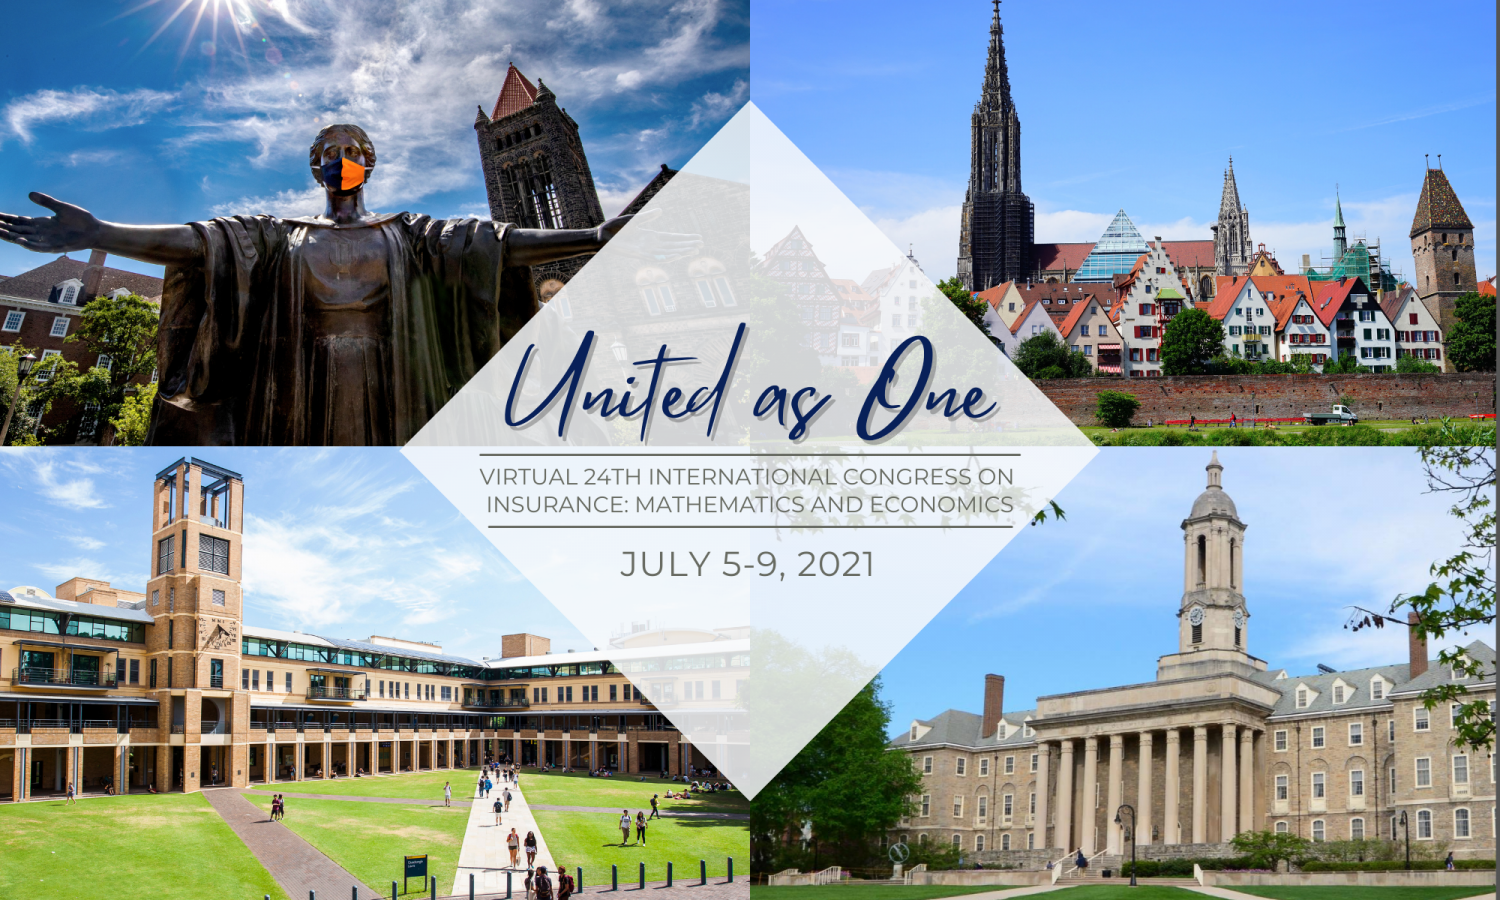 United As One: 24th International Congress on Insurance: Mathematics and Economics